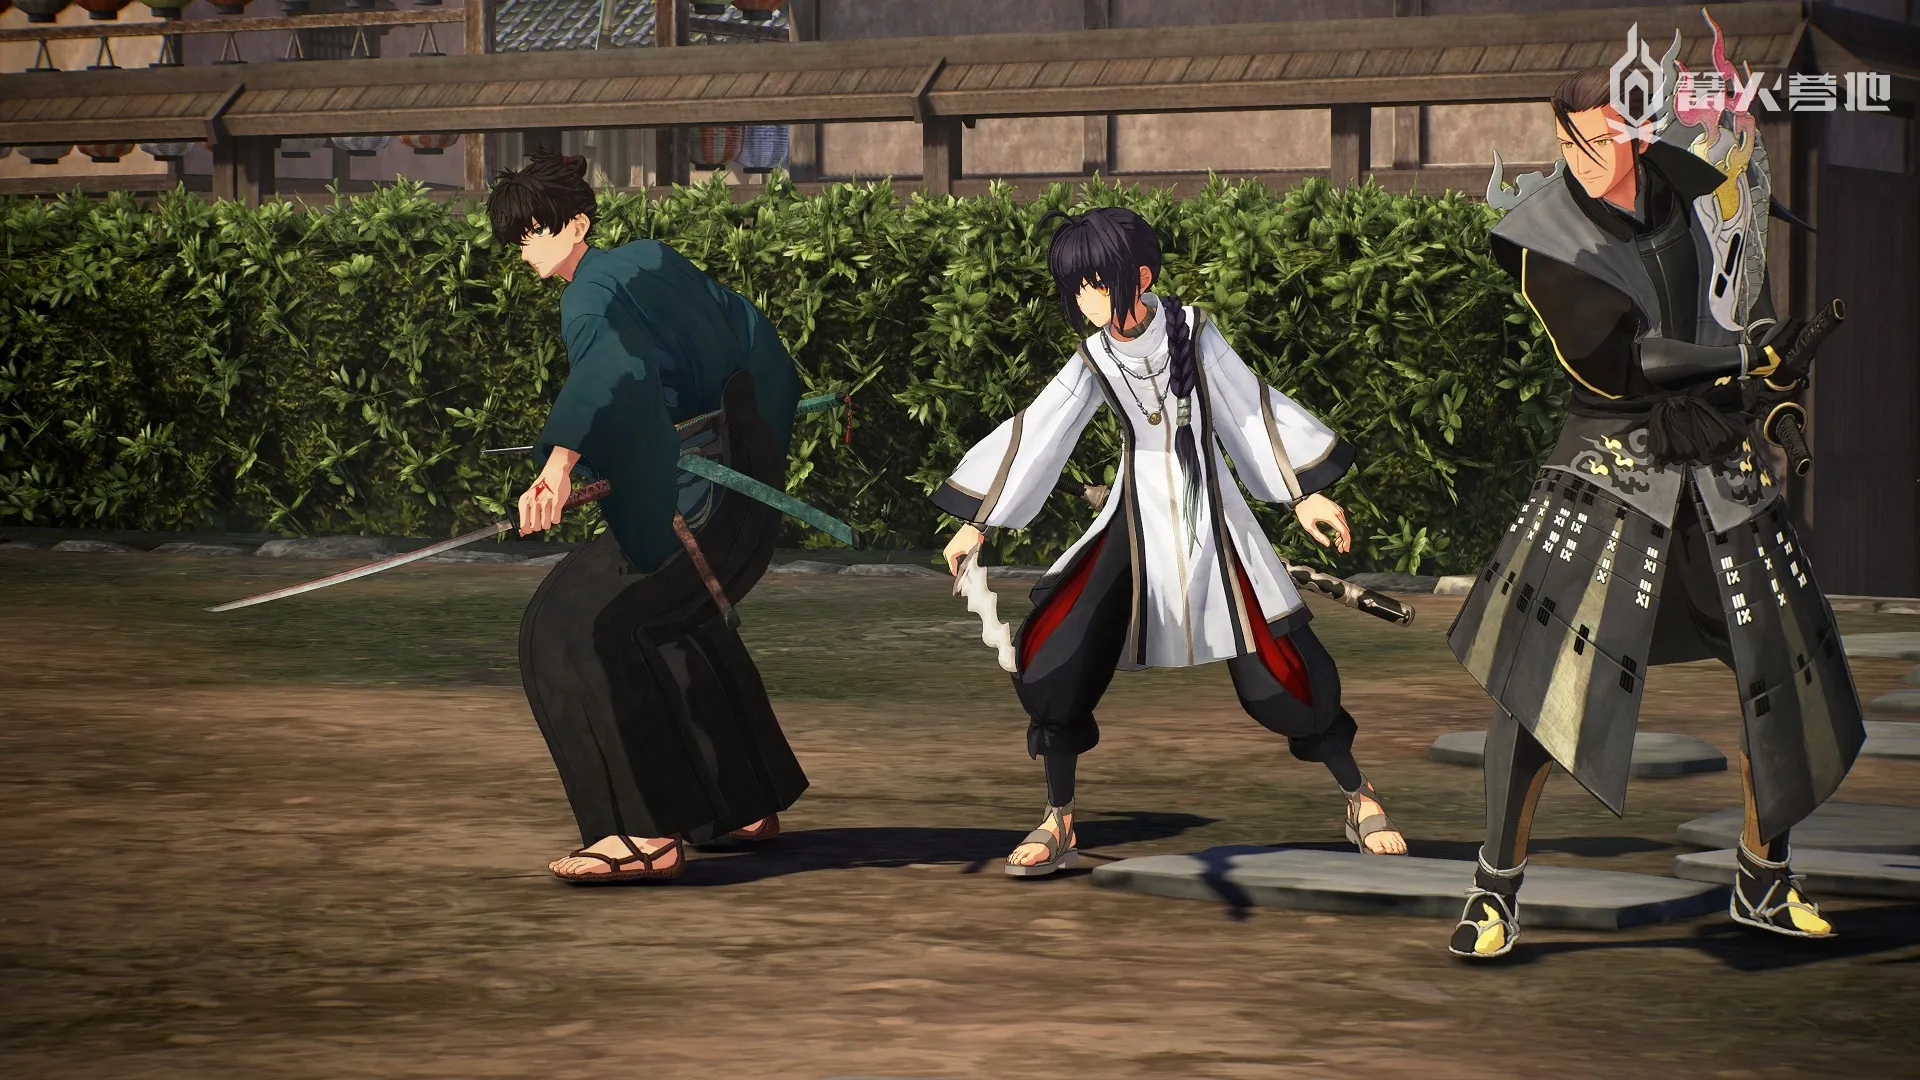 《Fate/Samurai Remnant》 4 月 18 日推出第 2 彈 DLC